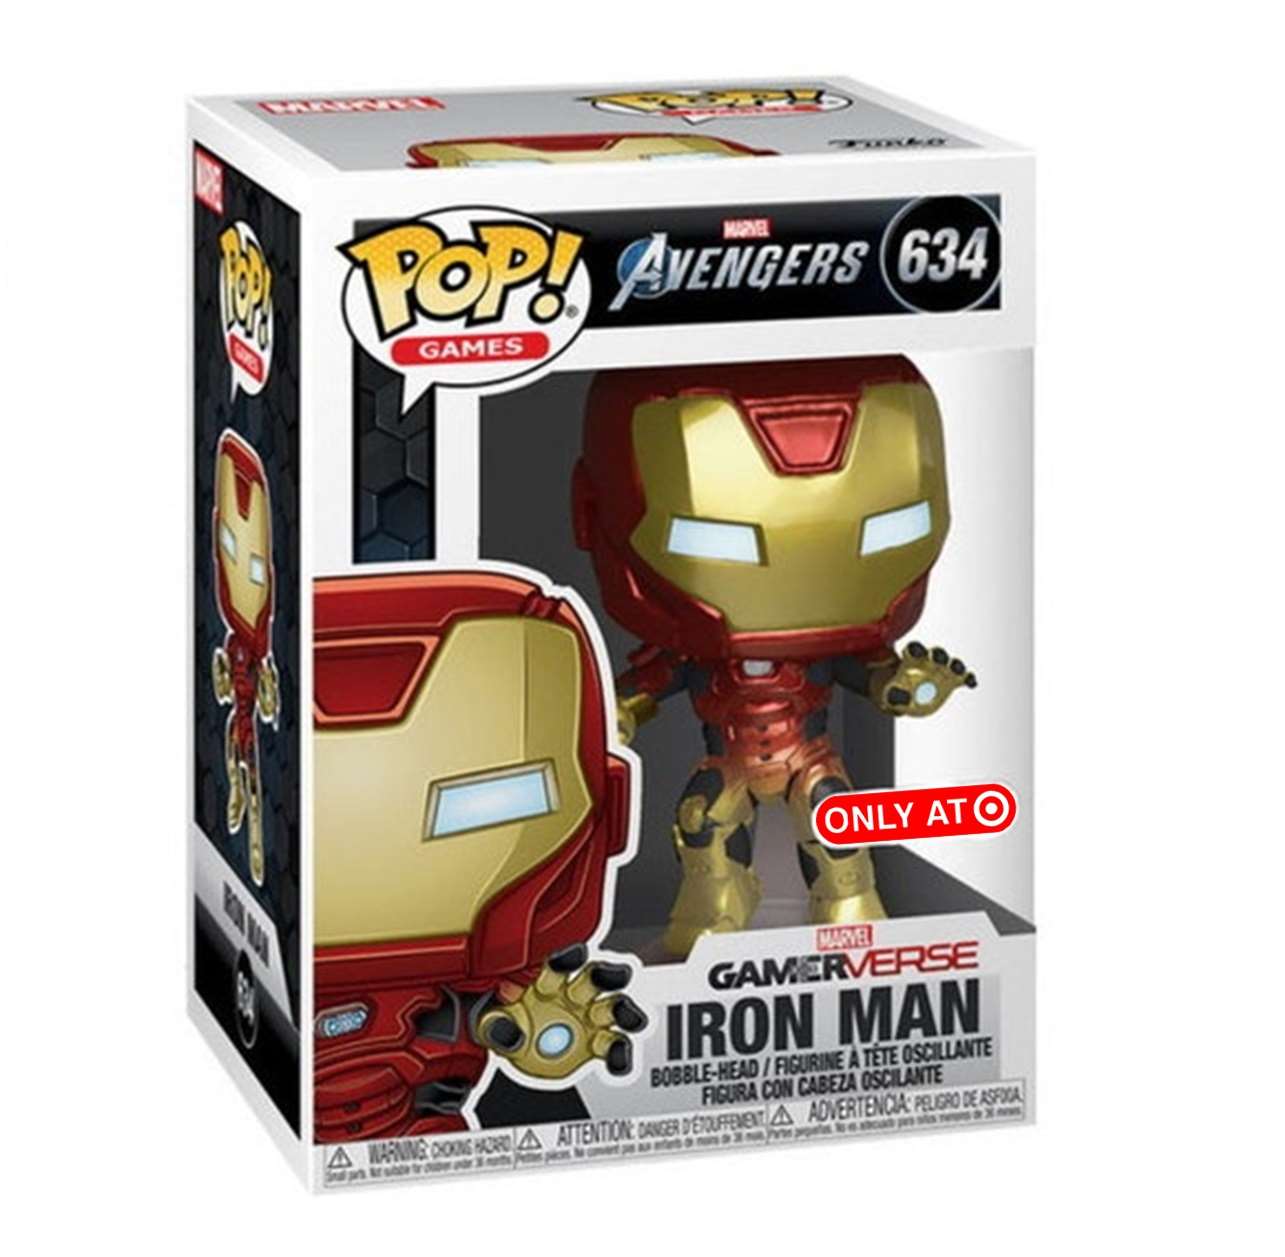 Iron Man #634 Figura Avengers Gamerverse Exclusivo Only A T